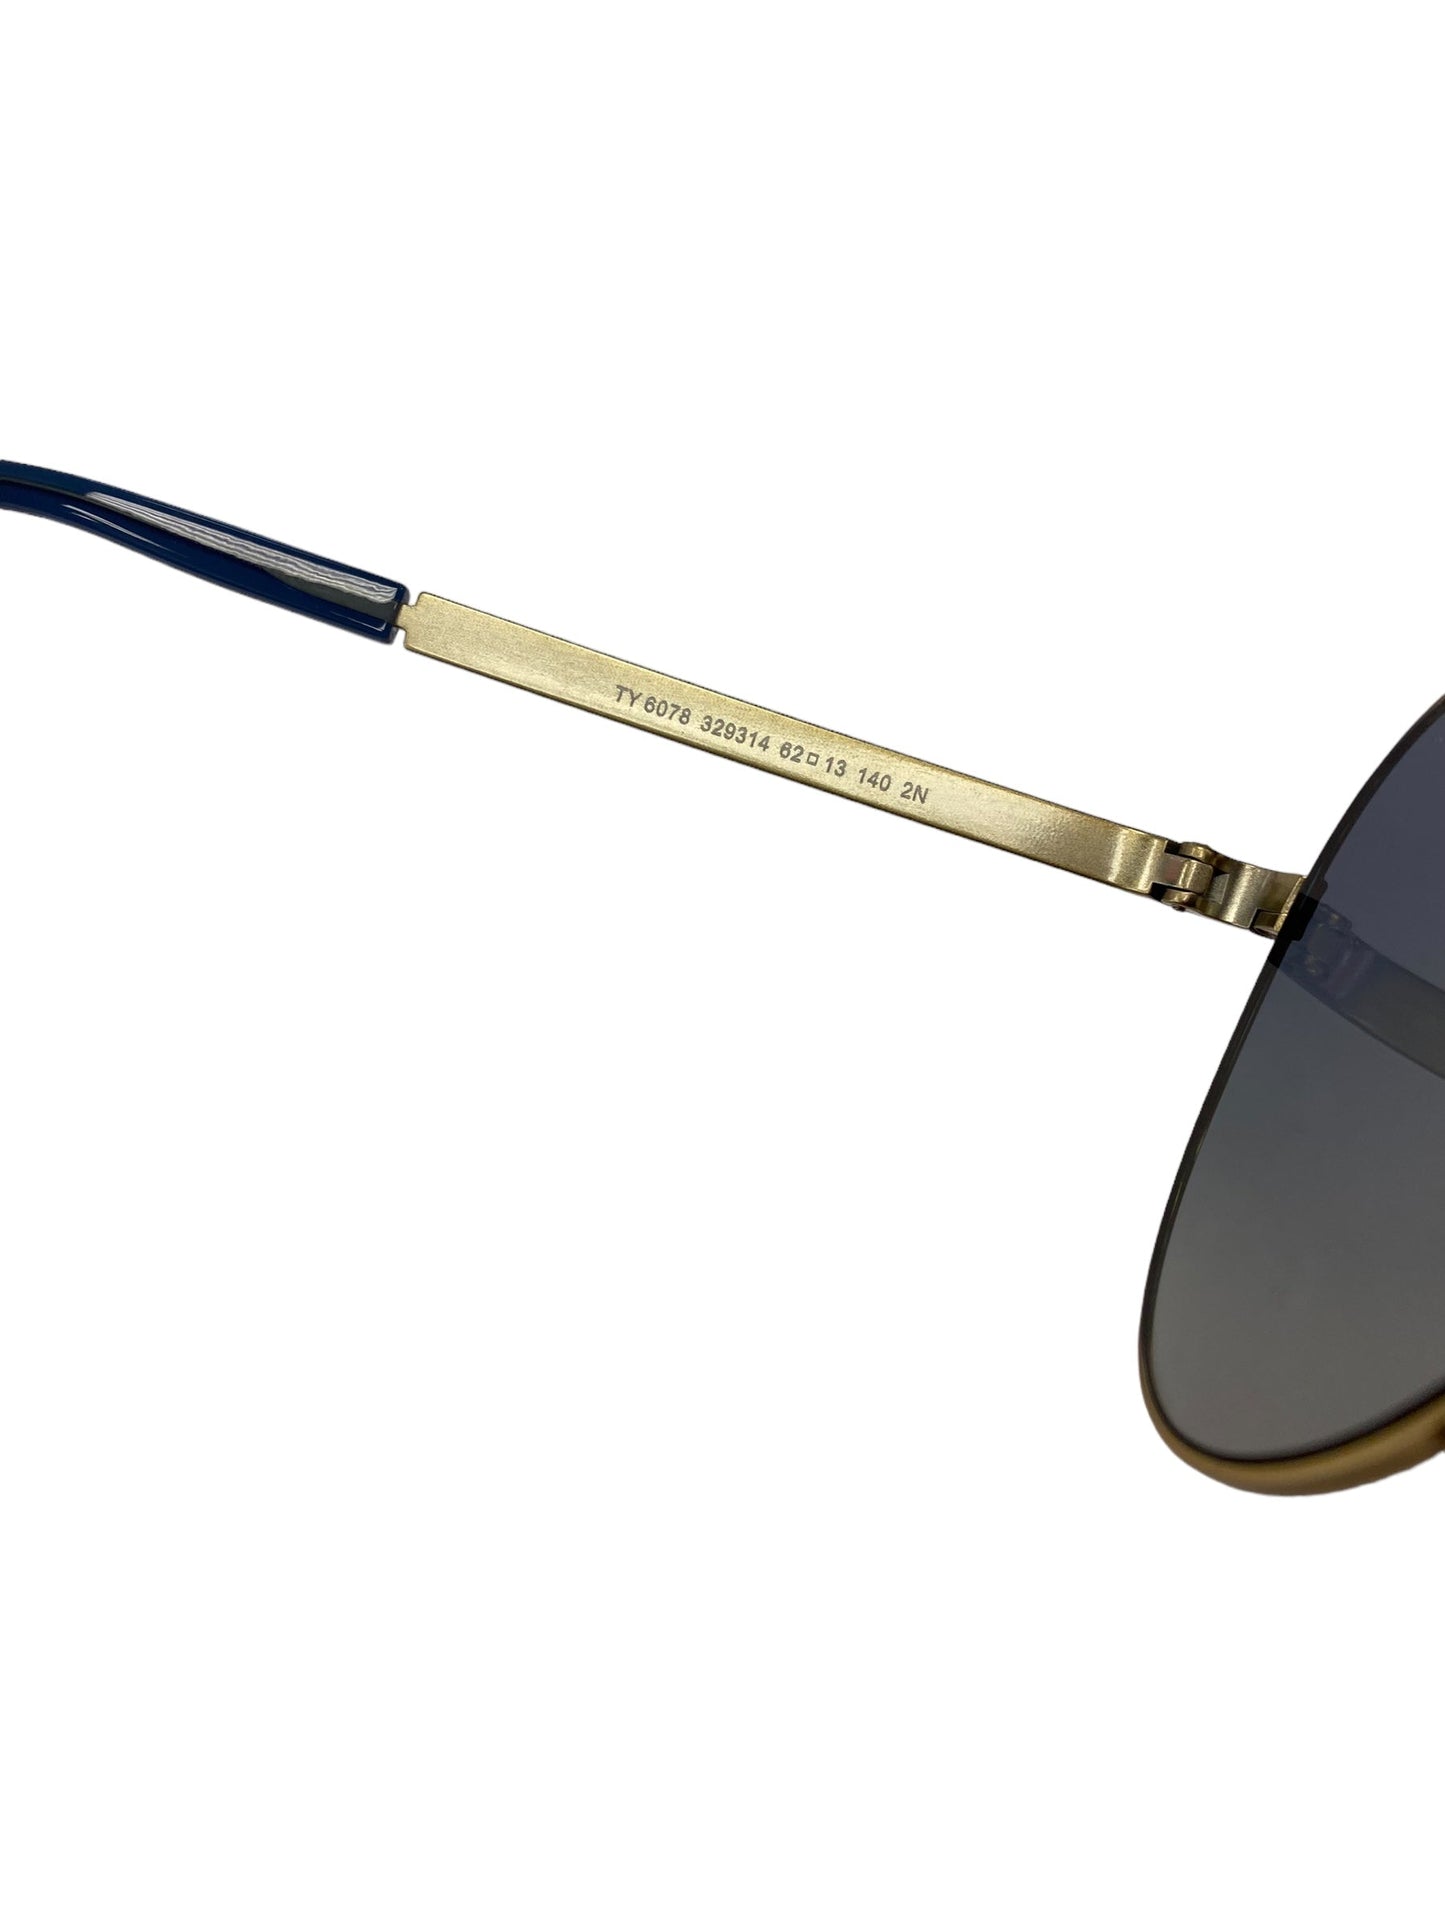 Sunglasses Designer Tory Burch